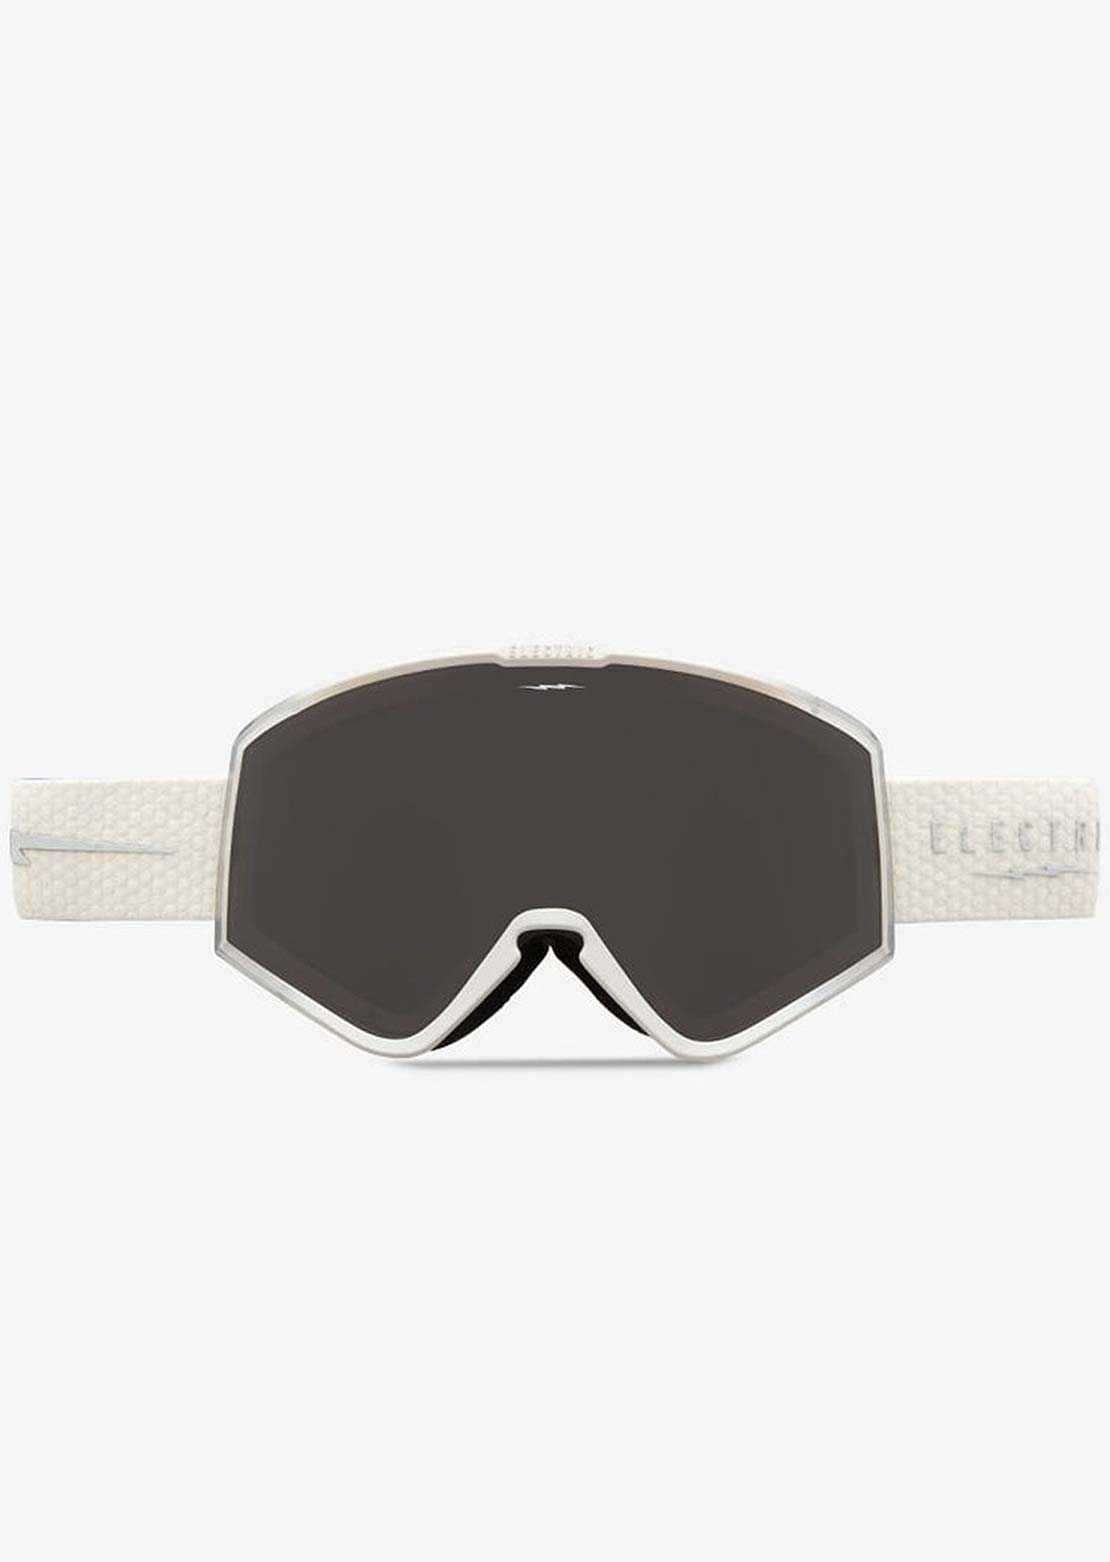 Electric Kleveland Snow Goggles Matte Stealth Grey Bird/Light Grey